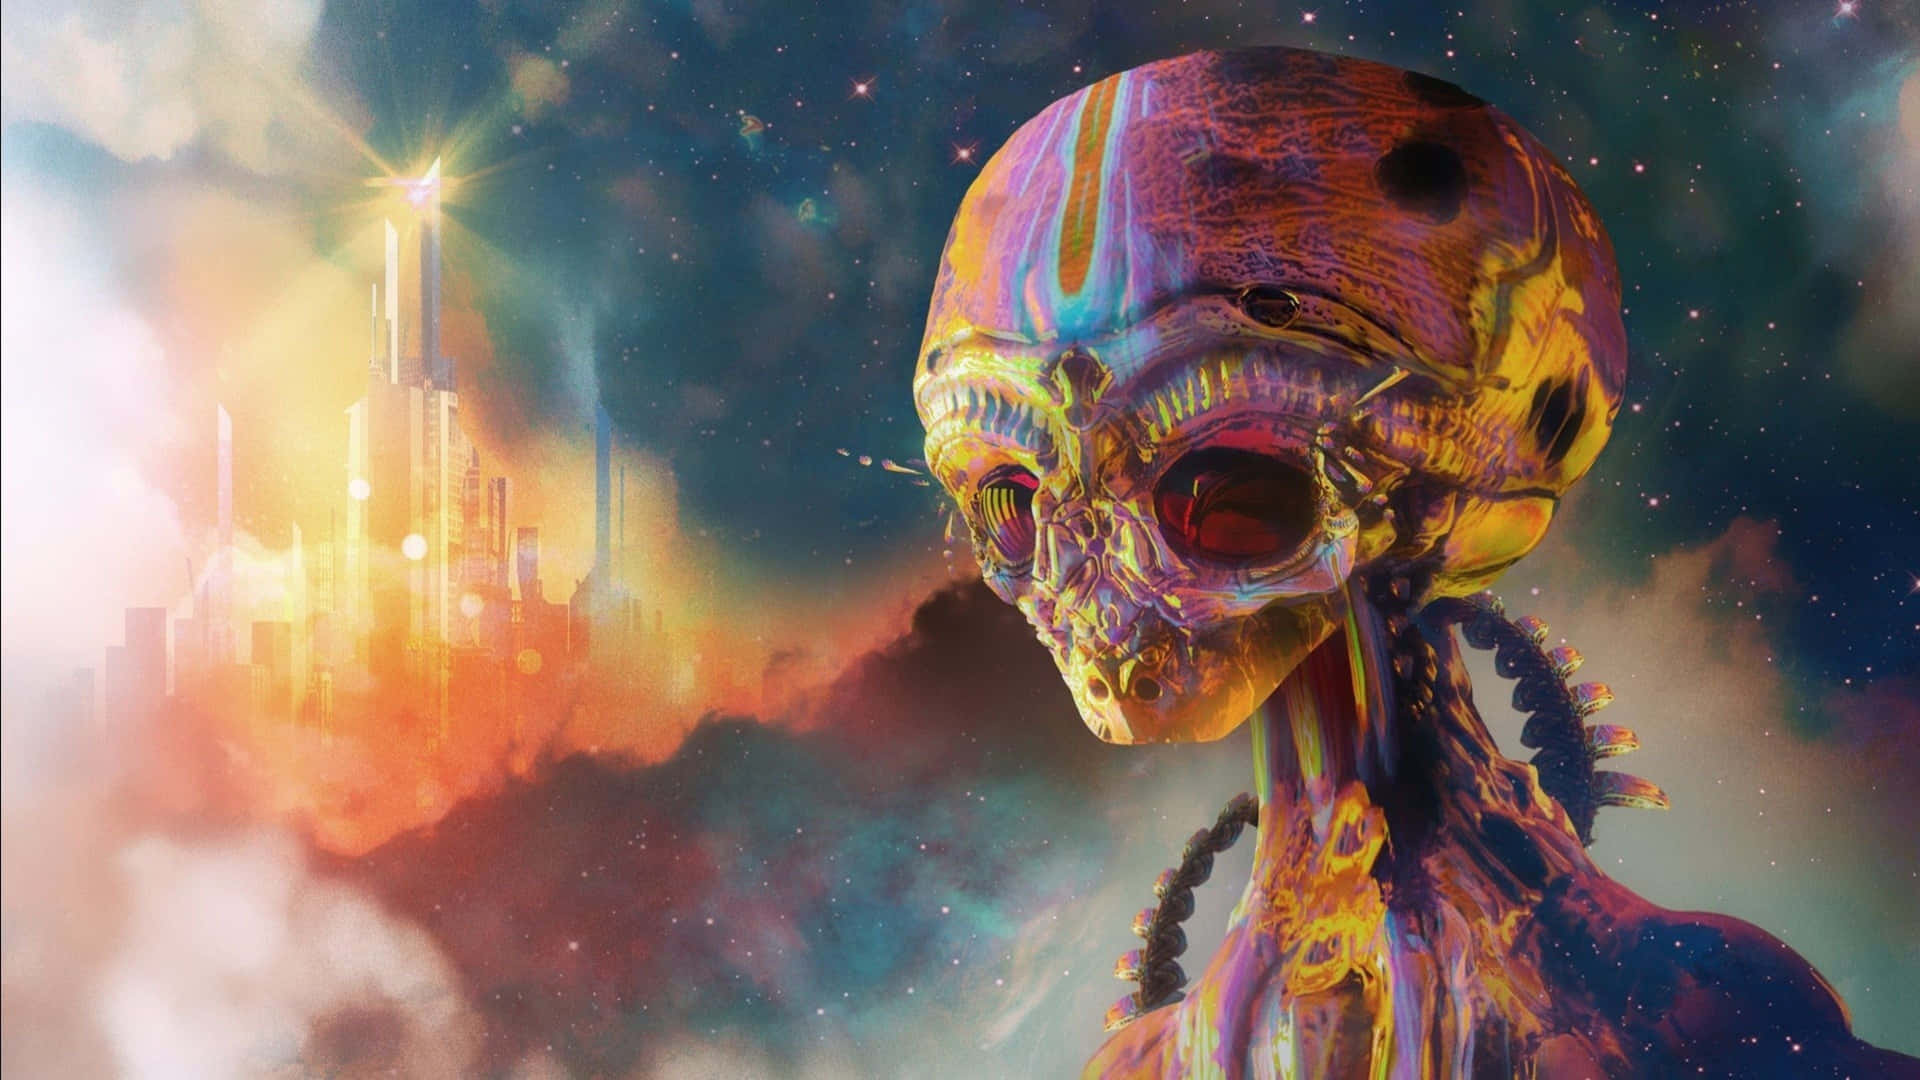 A colorful representation of the classic 'Alien' Wallpaper